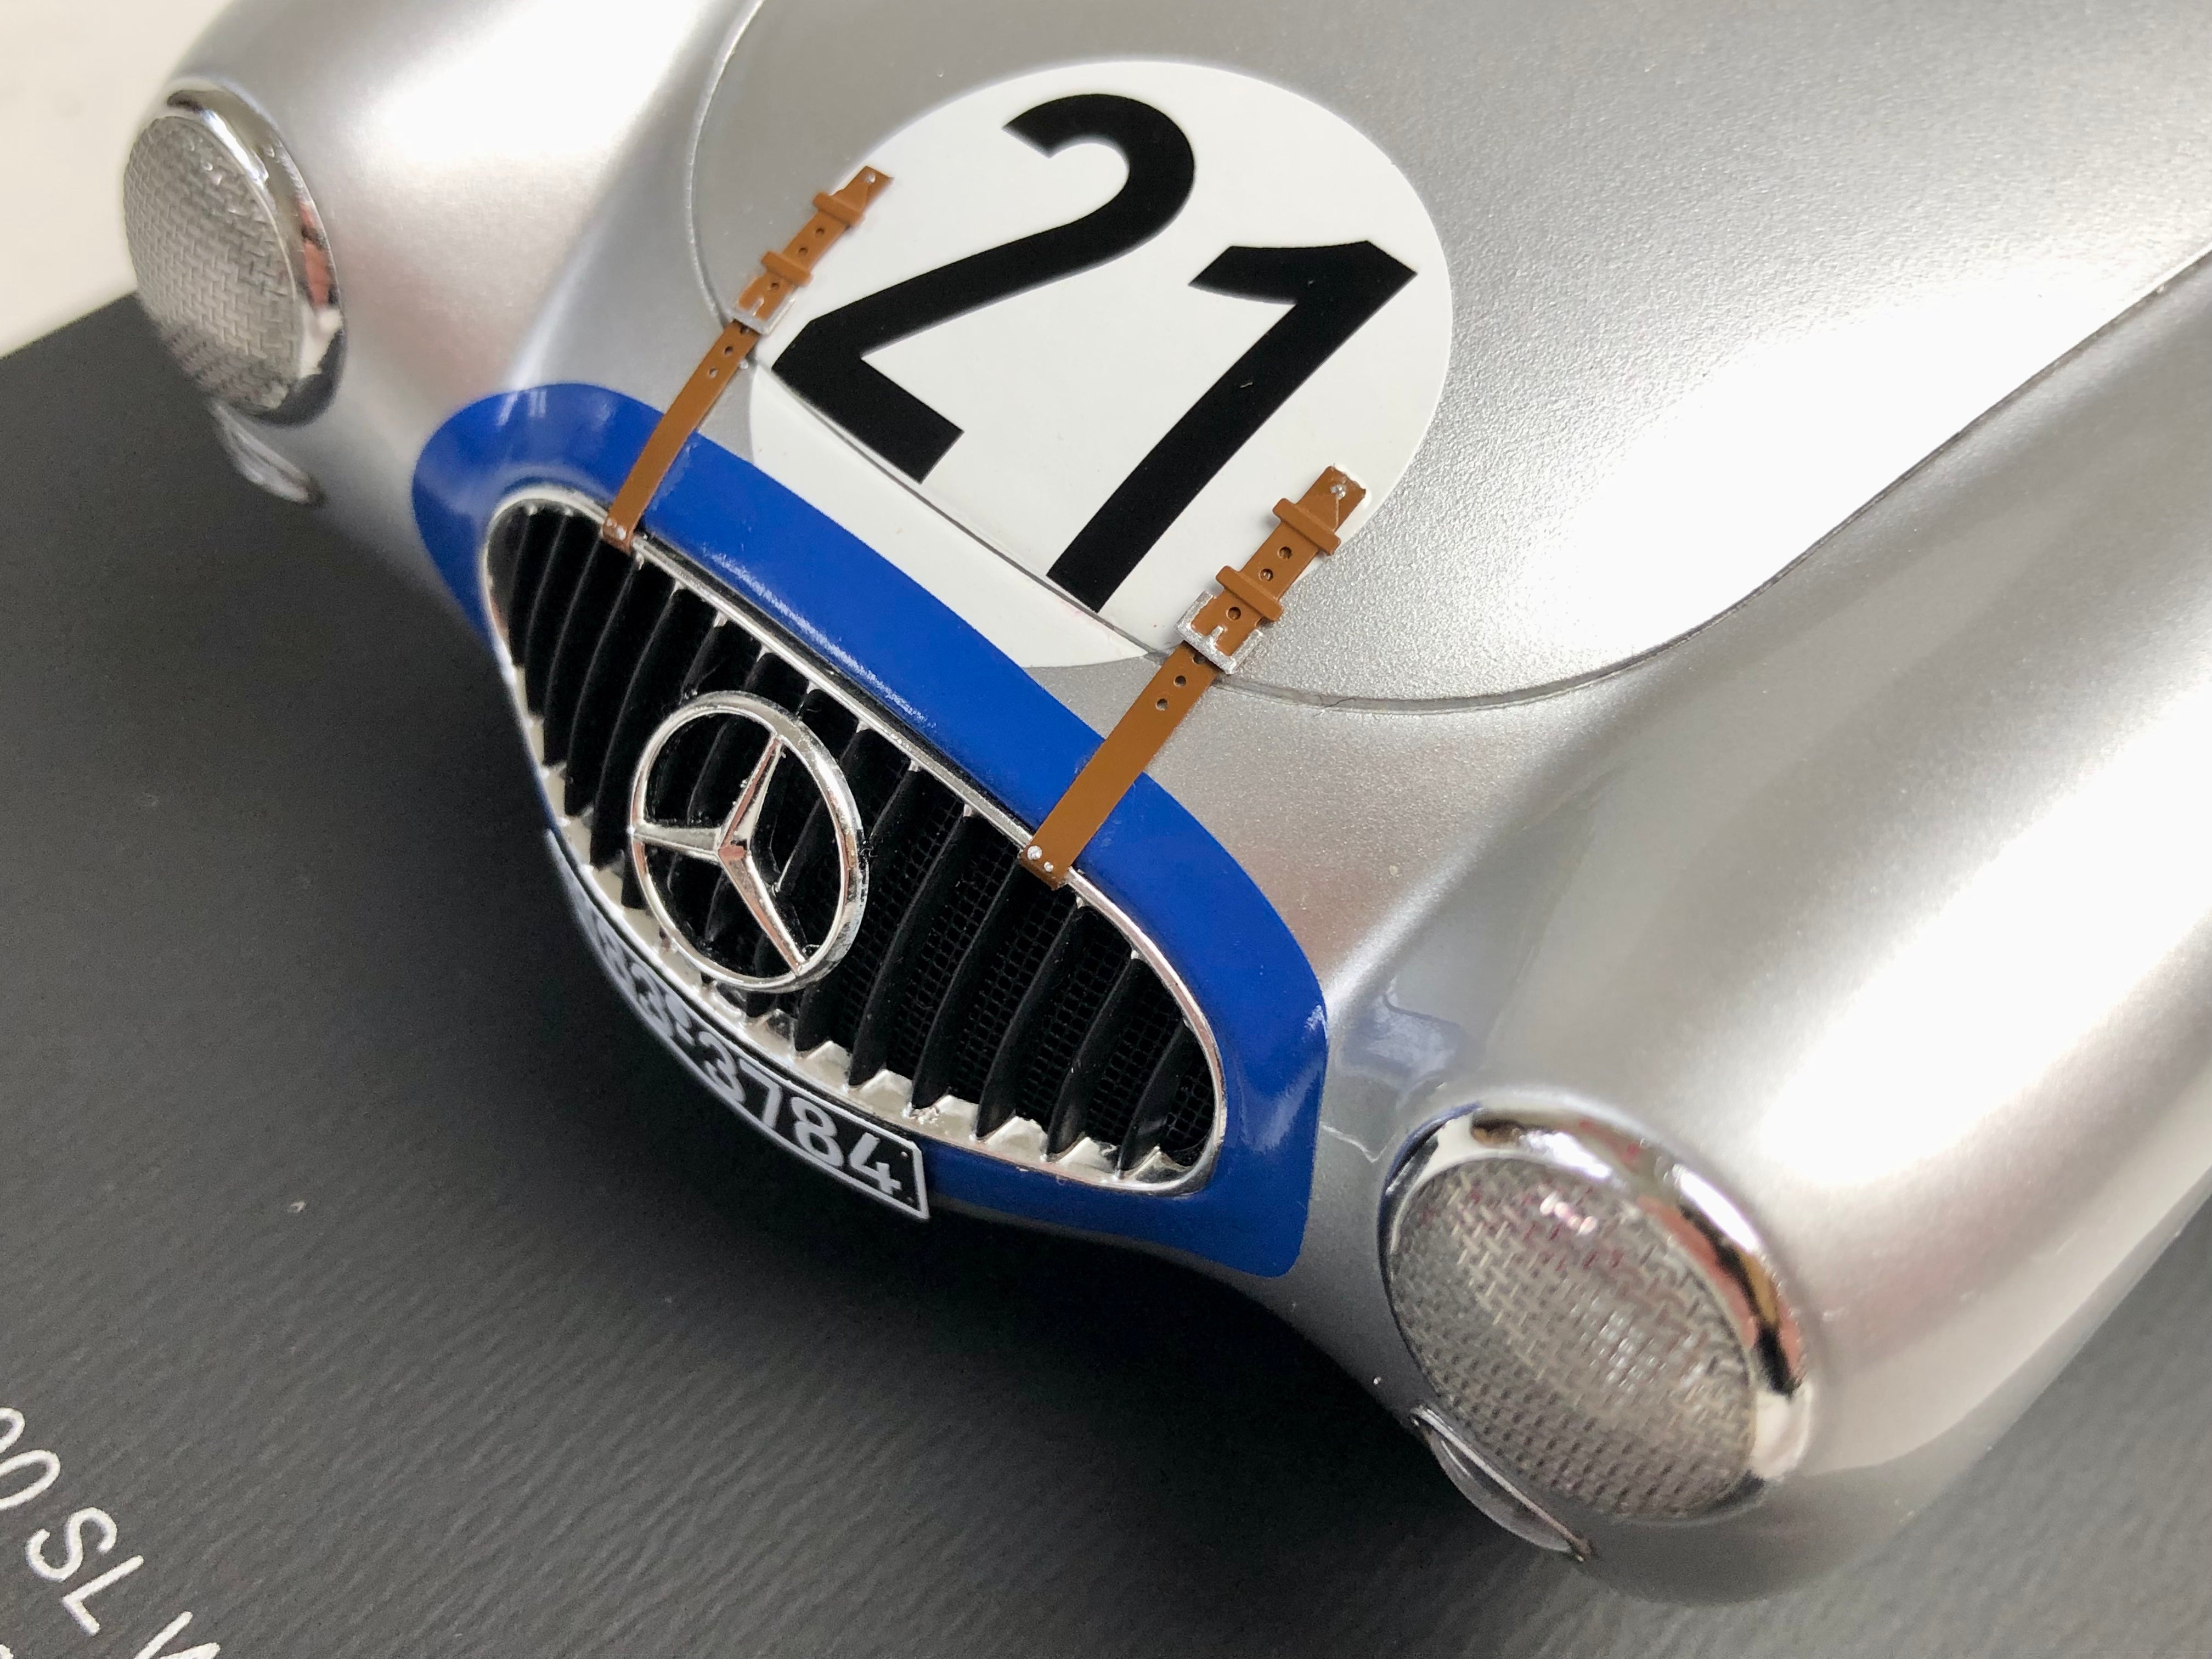 Mercedes 300 SL  Le Mans winner 1952 1:18 scale